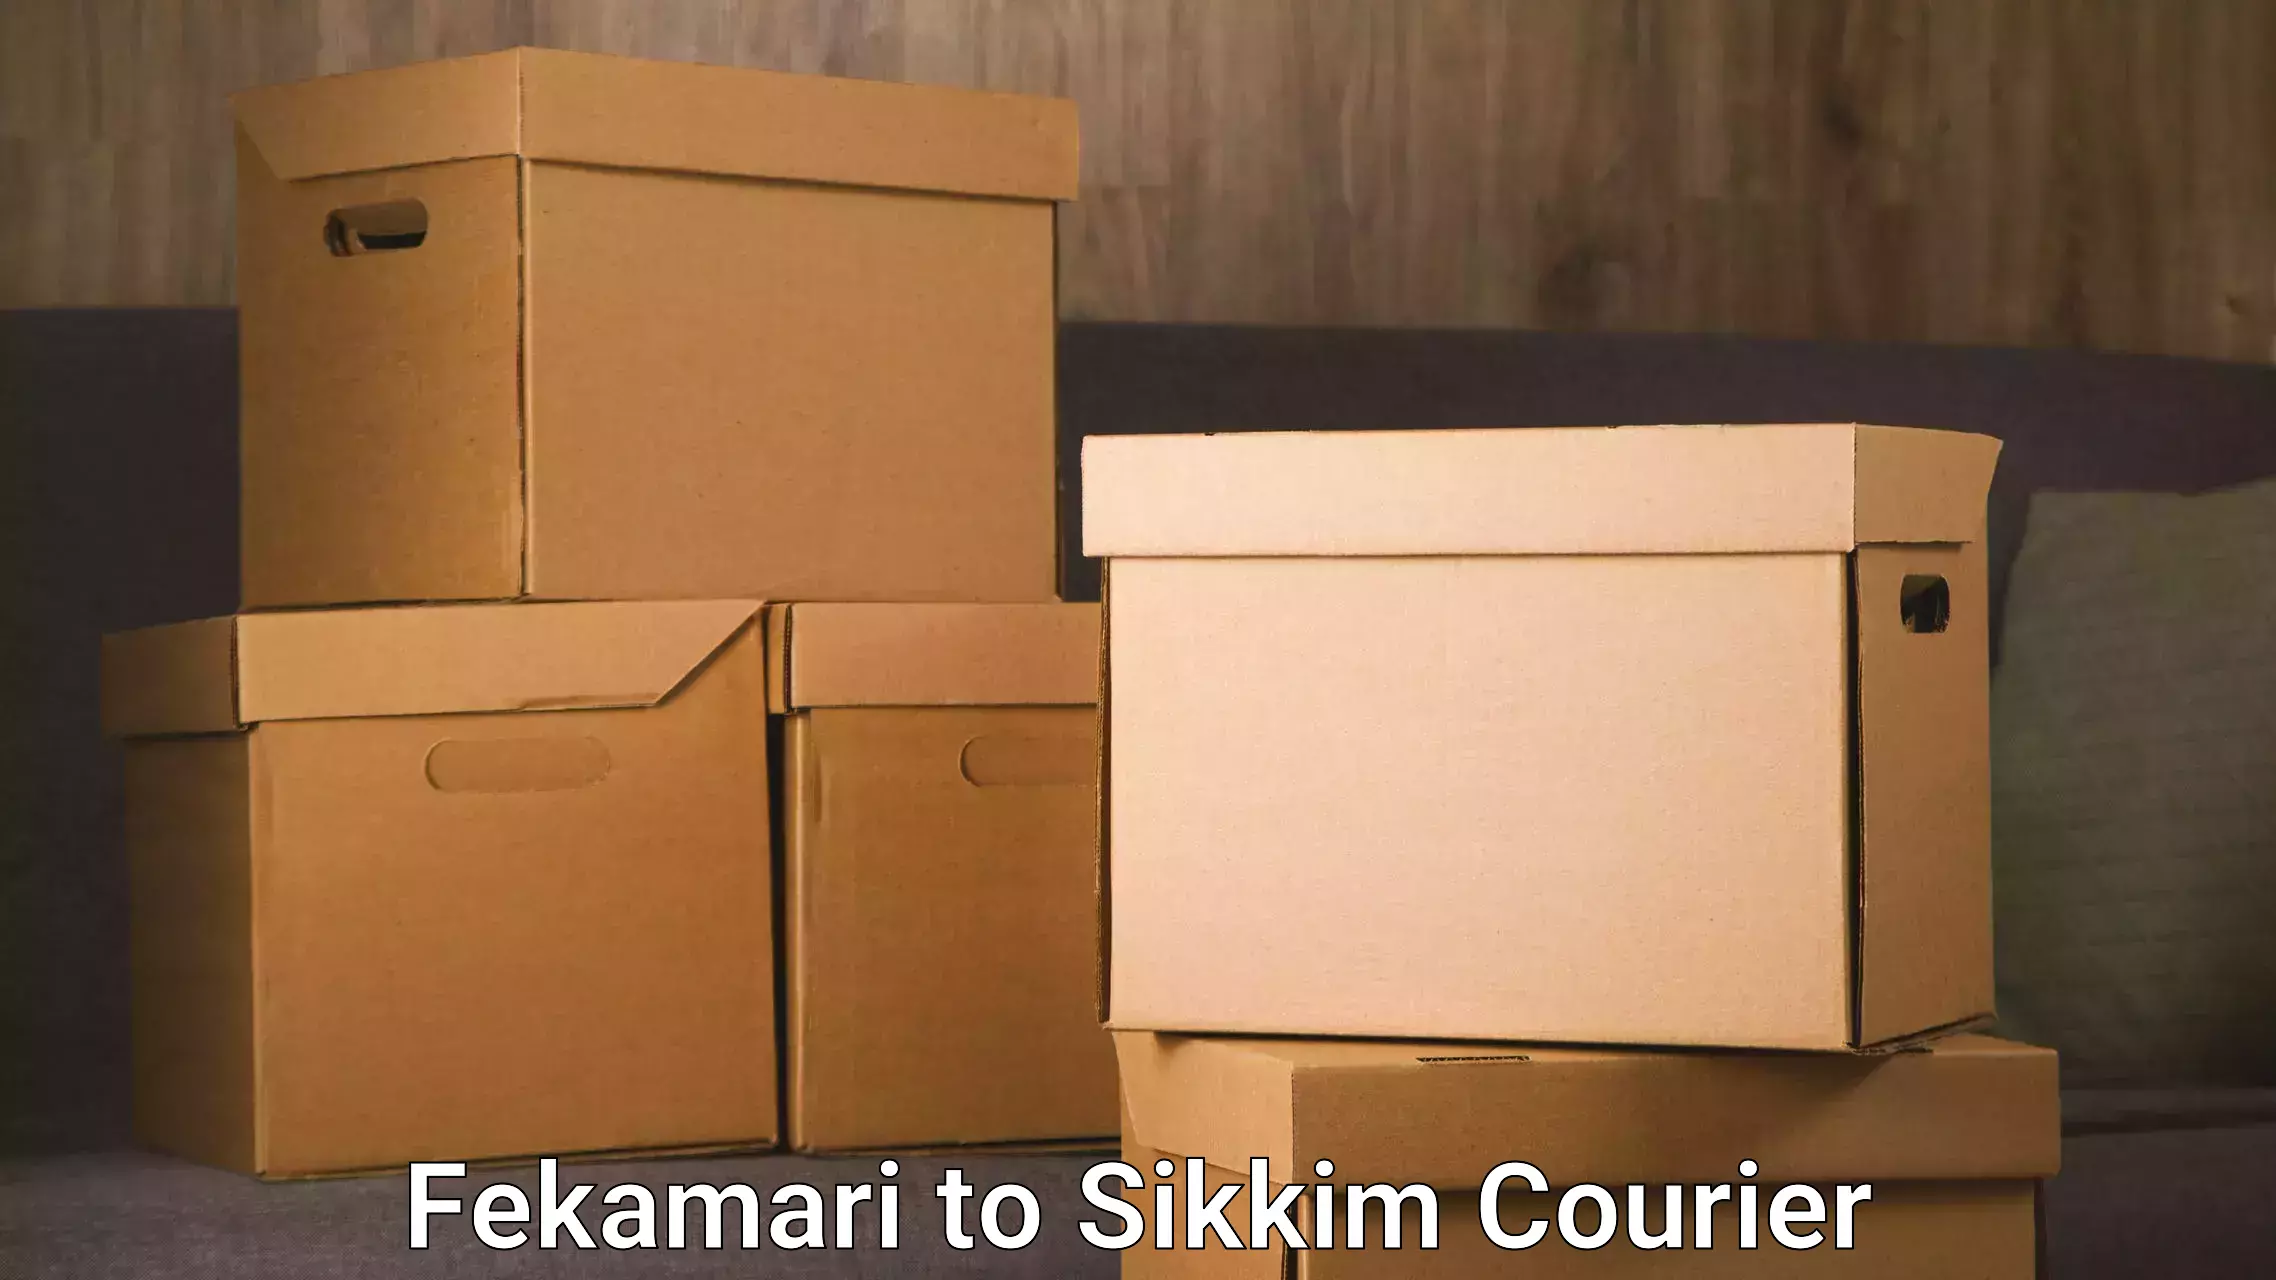 Reliable courier service Fekamari to Mangan